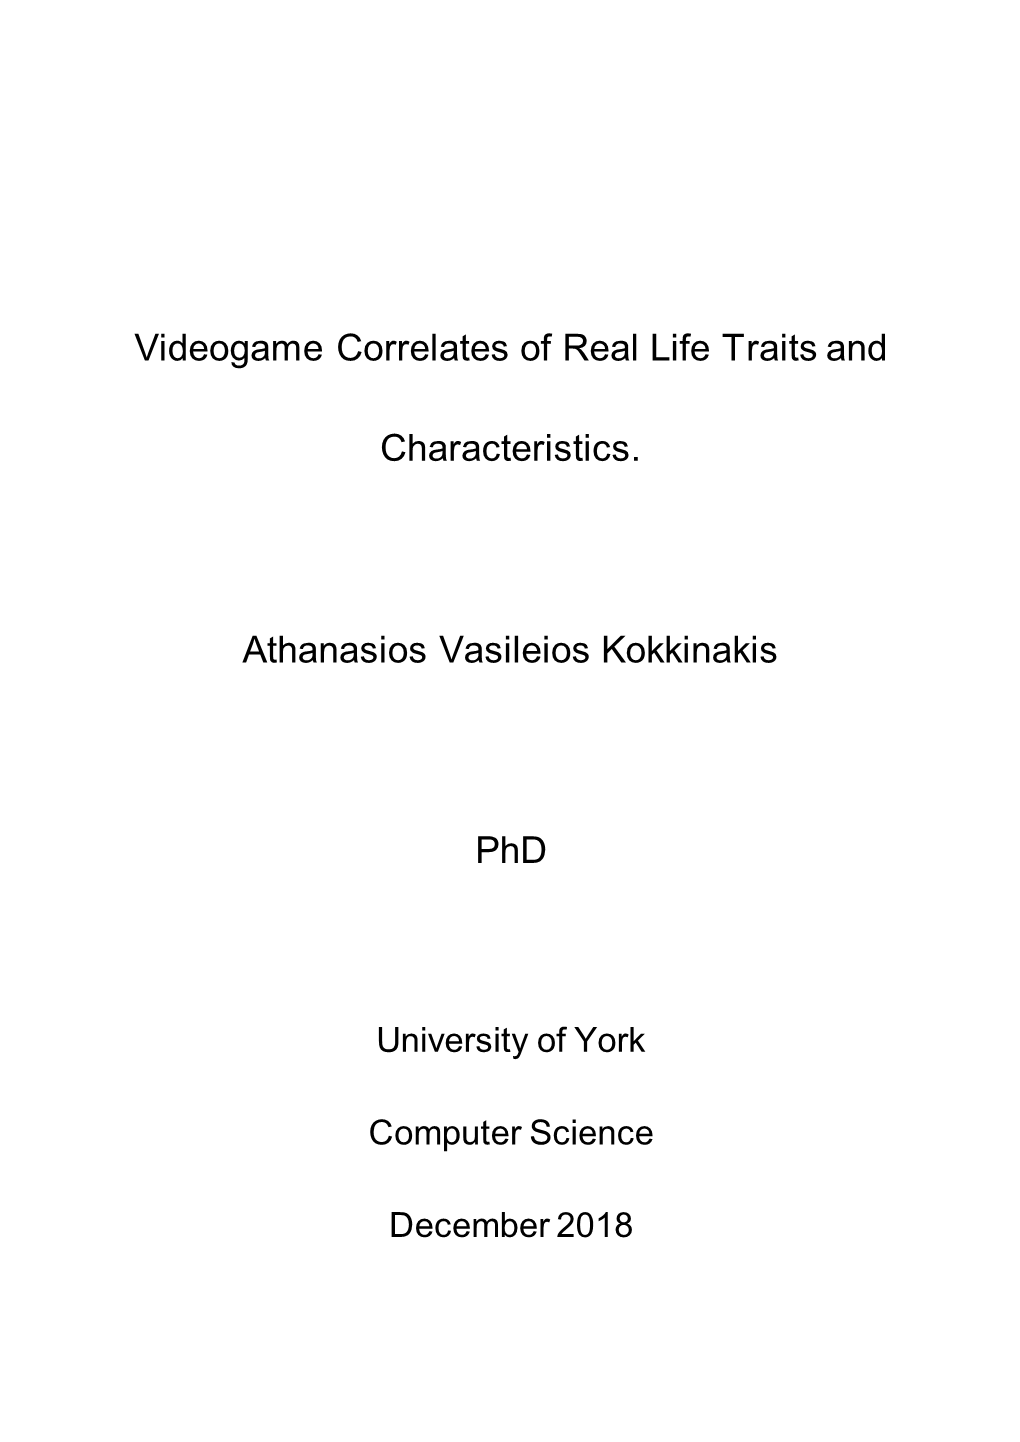 Videogame Correlates of Real Life Traits and Characteristics